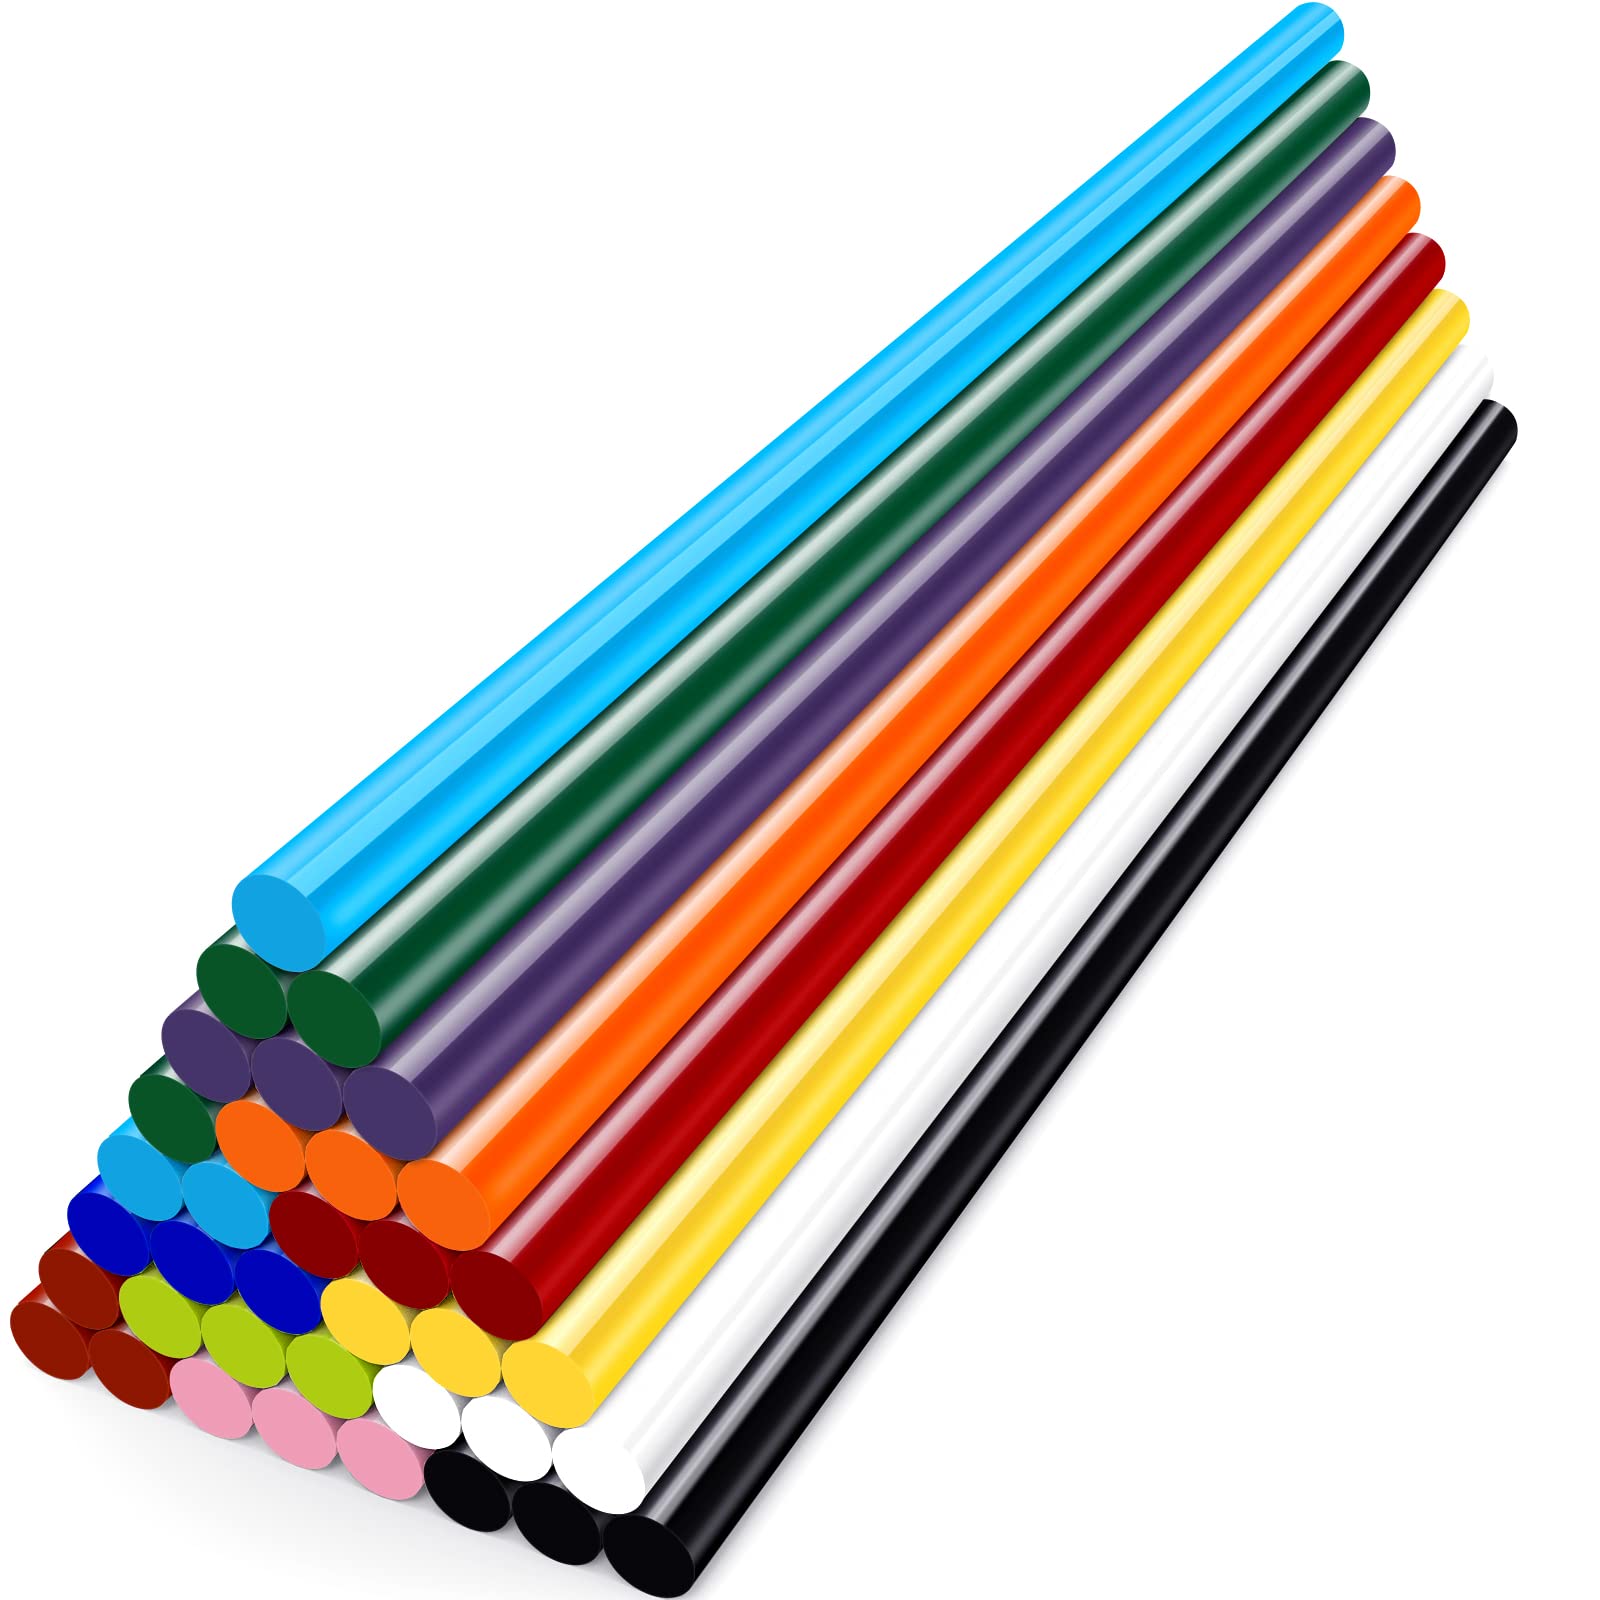 Colored Hot Glue Sticks ENPOINT 8 Long x 0.27 Dia Hot Melt Glue Sticks  Mini Size Bulk Color Adhesive Glue Sticks Small for Crafting DIY Art School  Gluing Project Repair Sealing 36